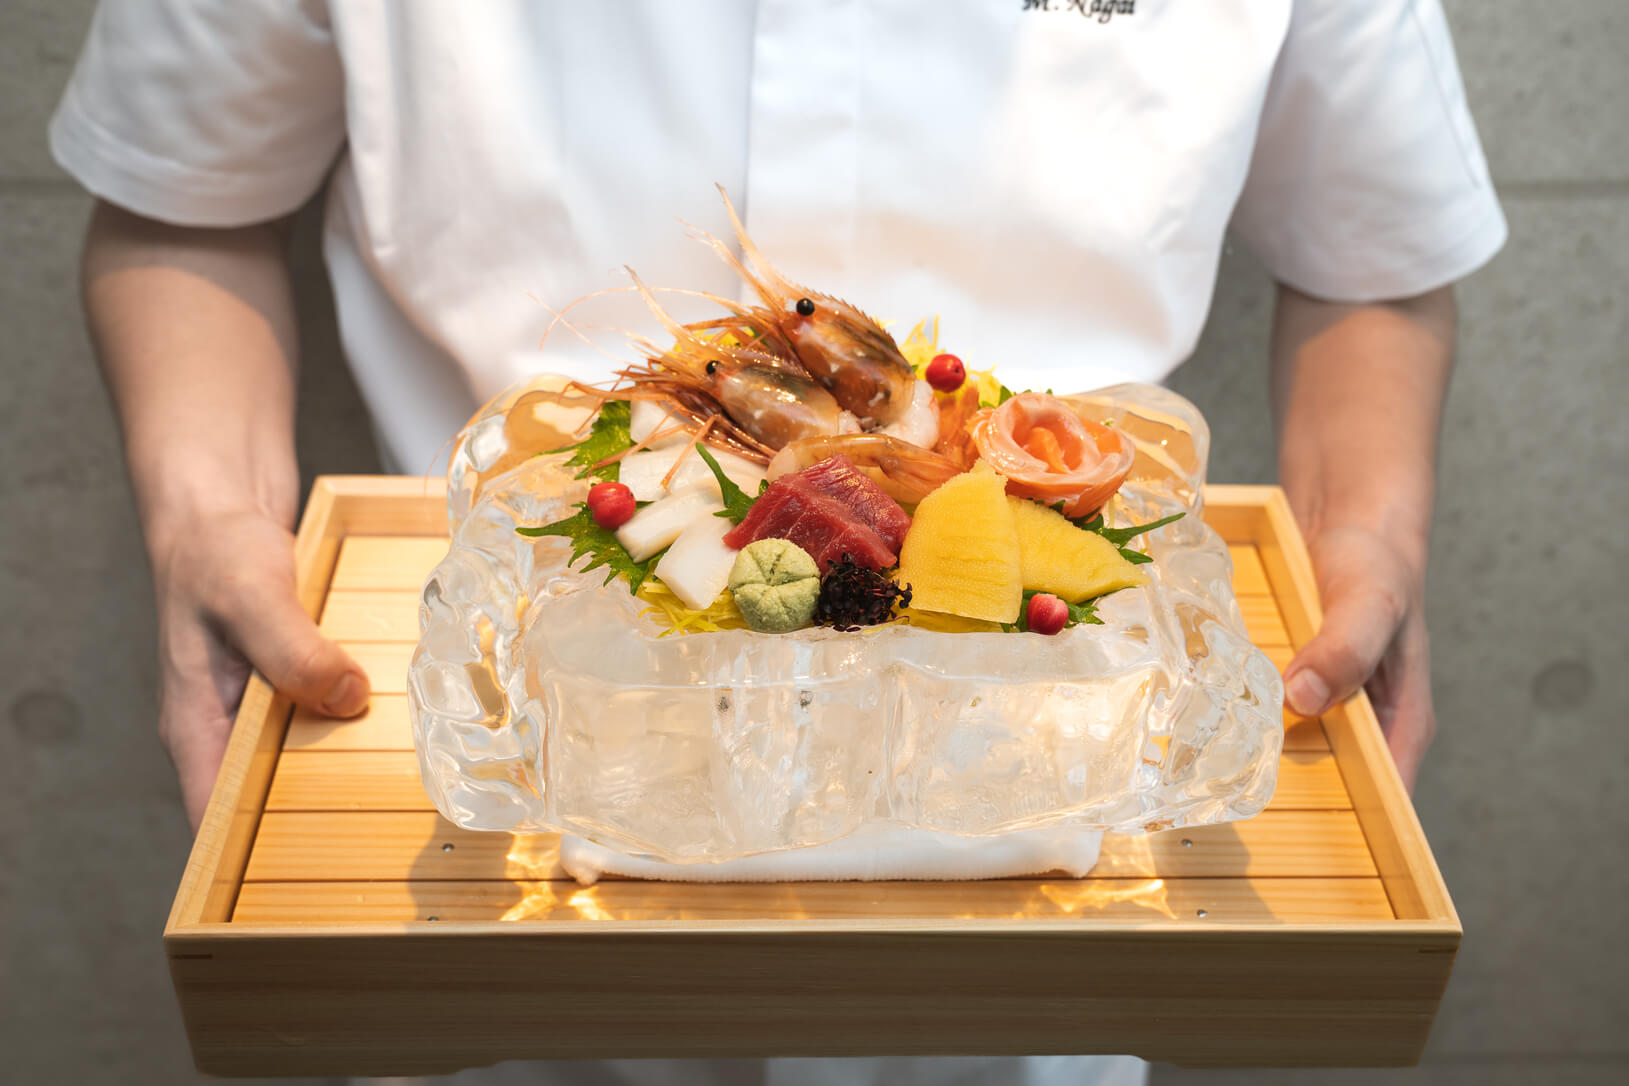 03-je-nagai-hokkaido-cuisine-handcarven-ice-plate-sashimi-hungrygowhere